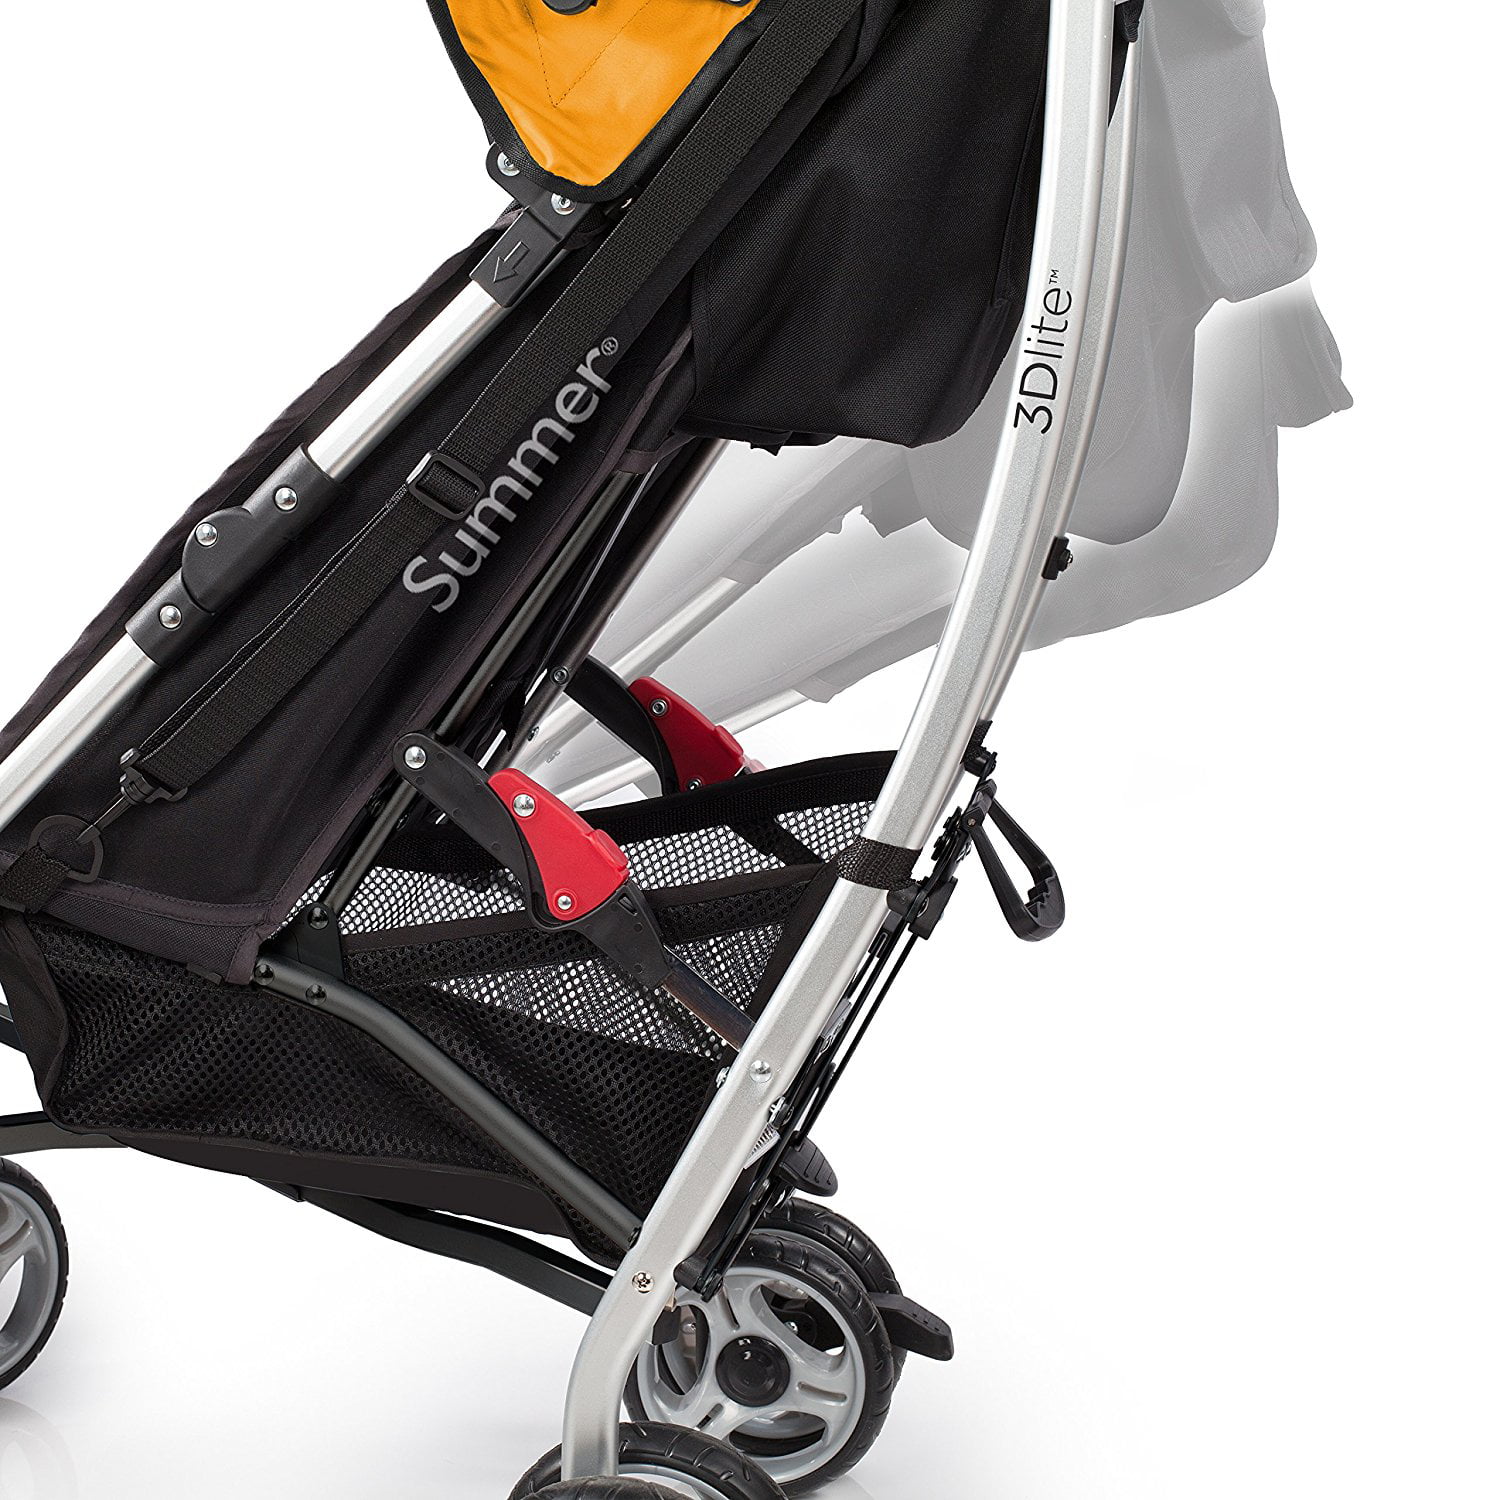 summer infant 3dmini convenience stroller